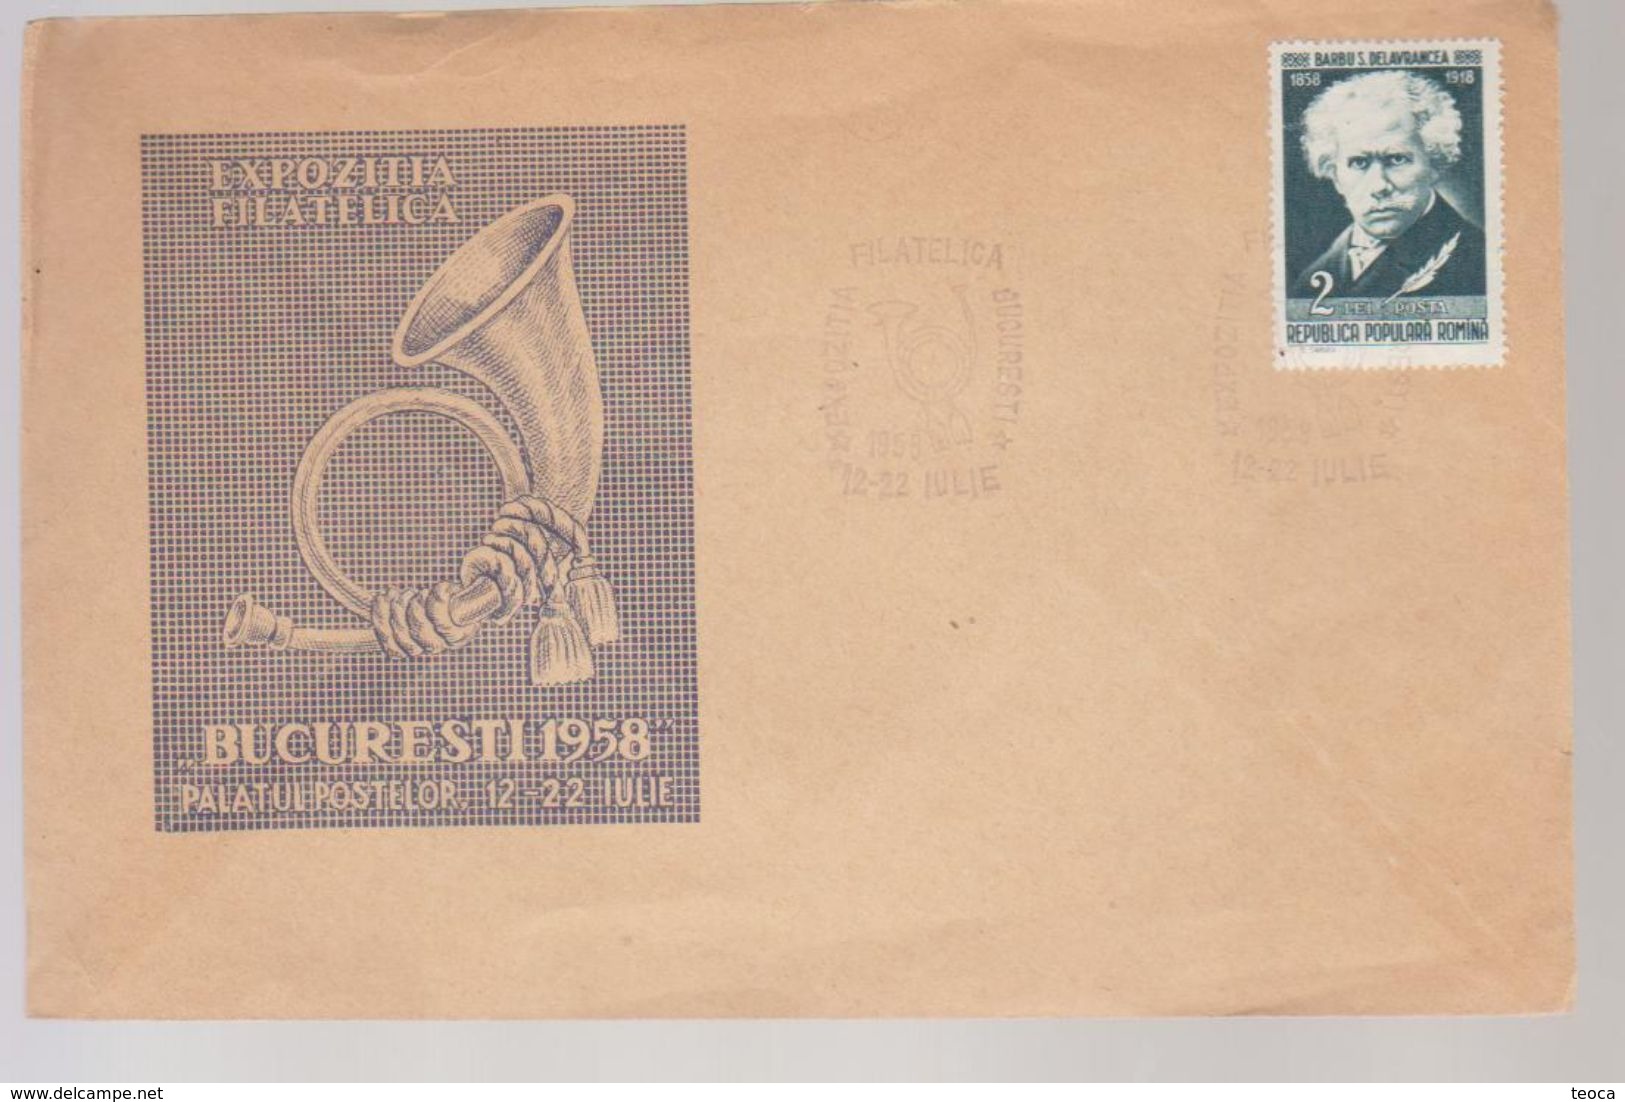 POSTHORN FDC Cover ROMANIA 1958 EXHIBITION PHILATELIC BUCURESTI 1958 , COVER SPECIAL - Briefe U. Dokumente